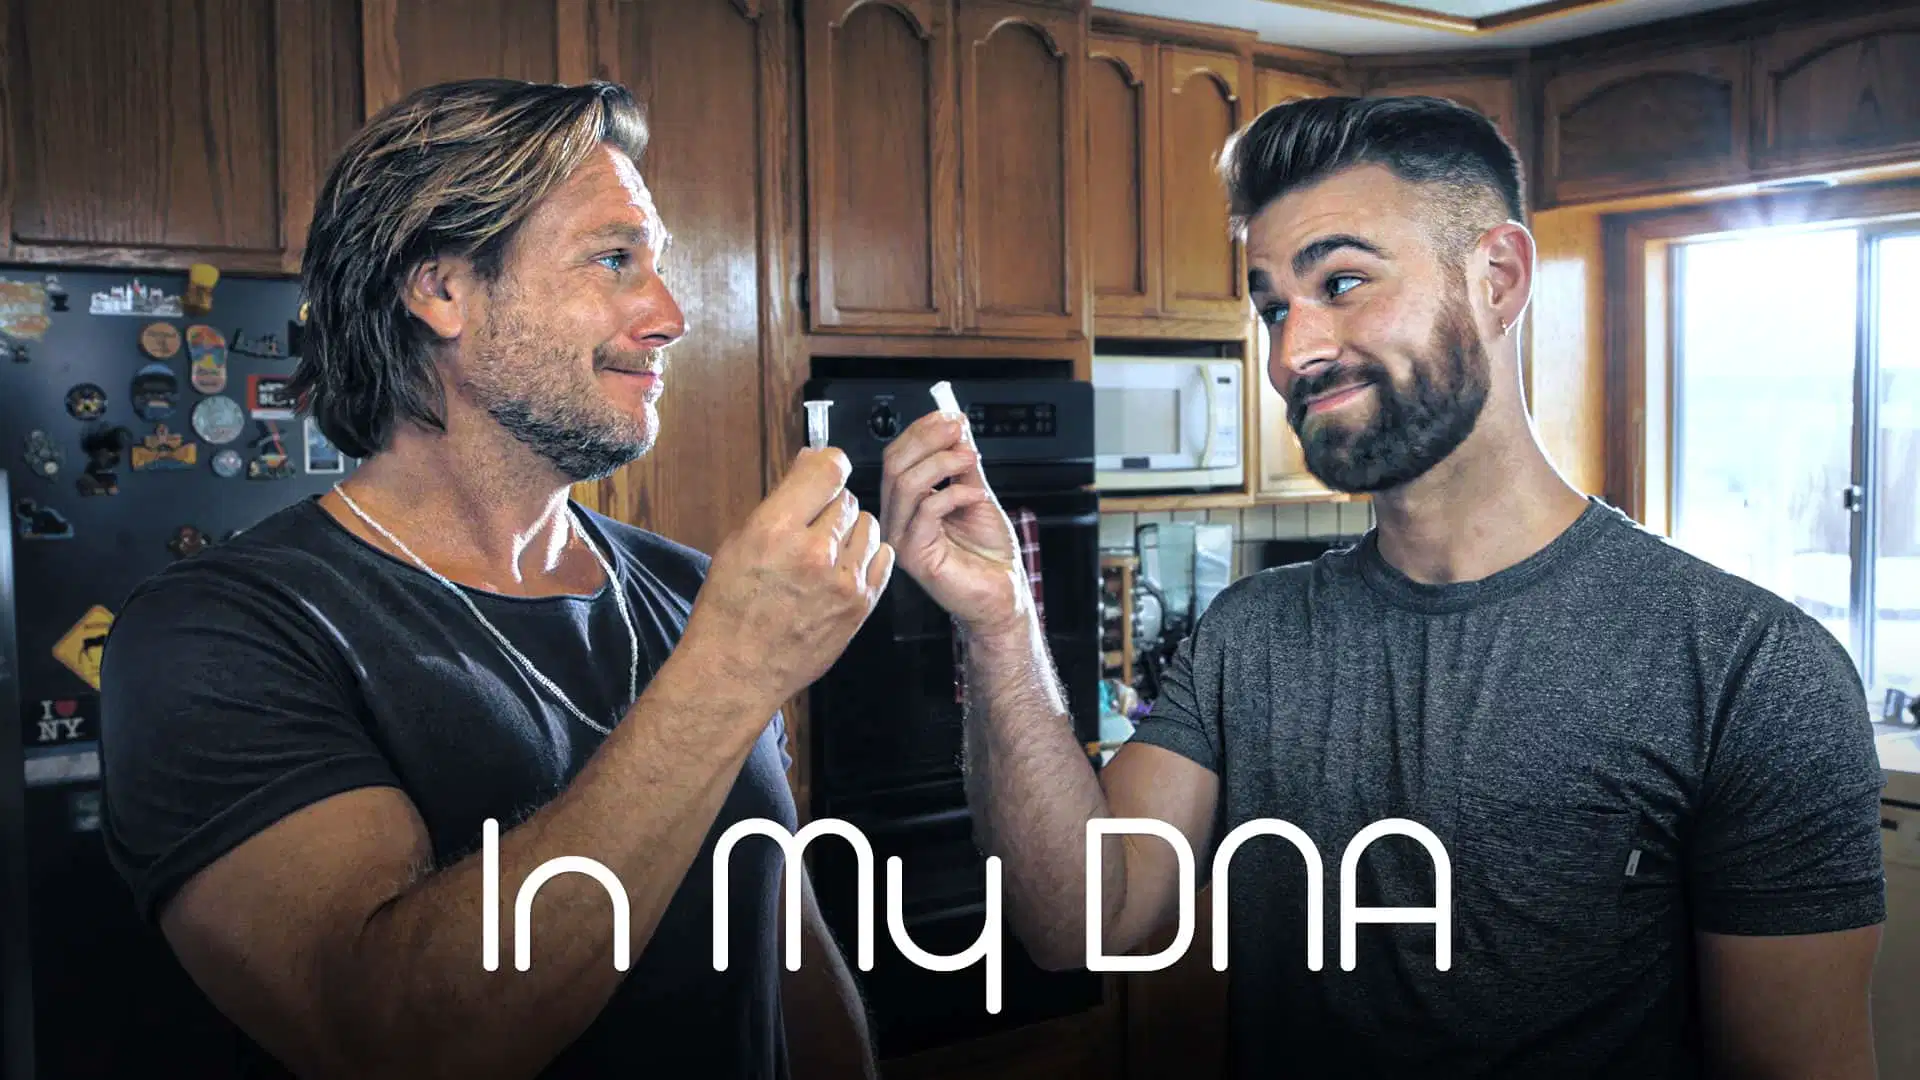 In My DNA – Hans Berlin and Declan Blake